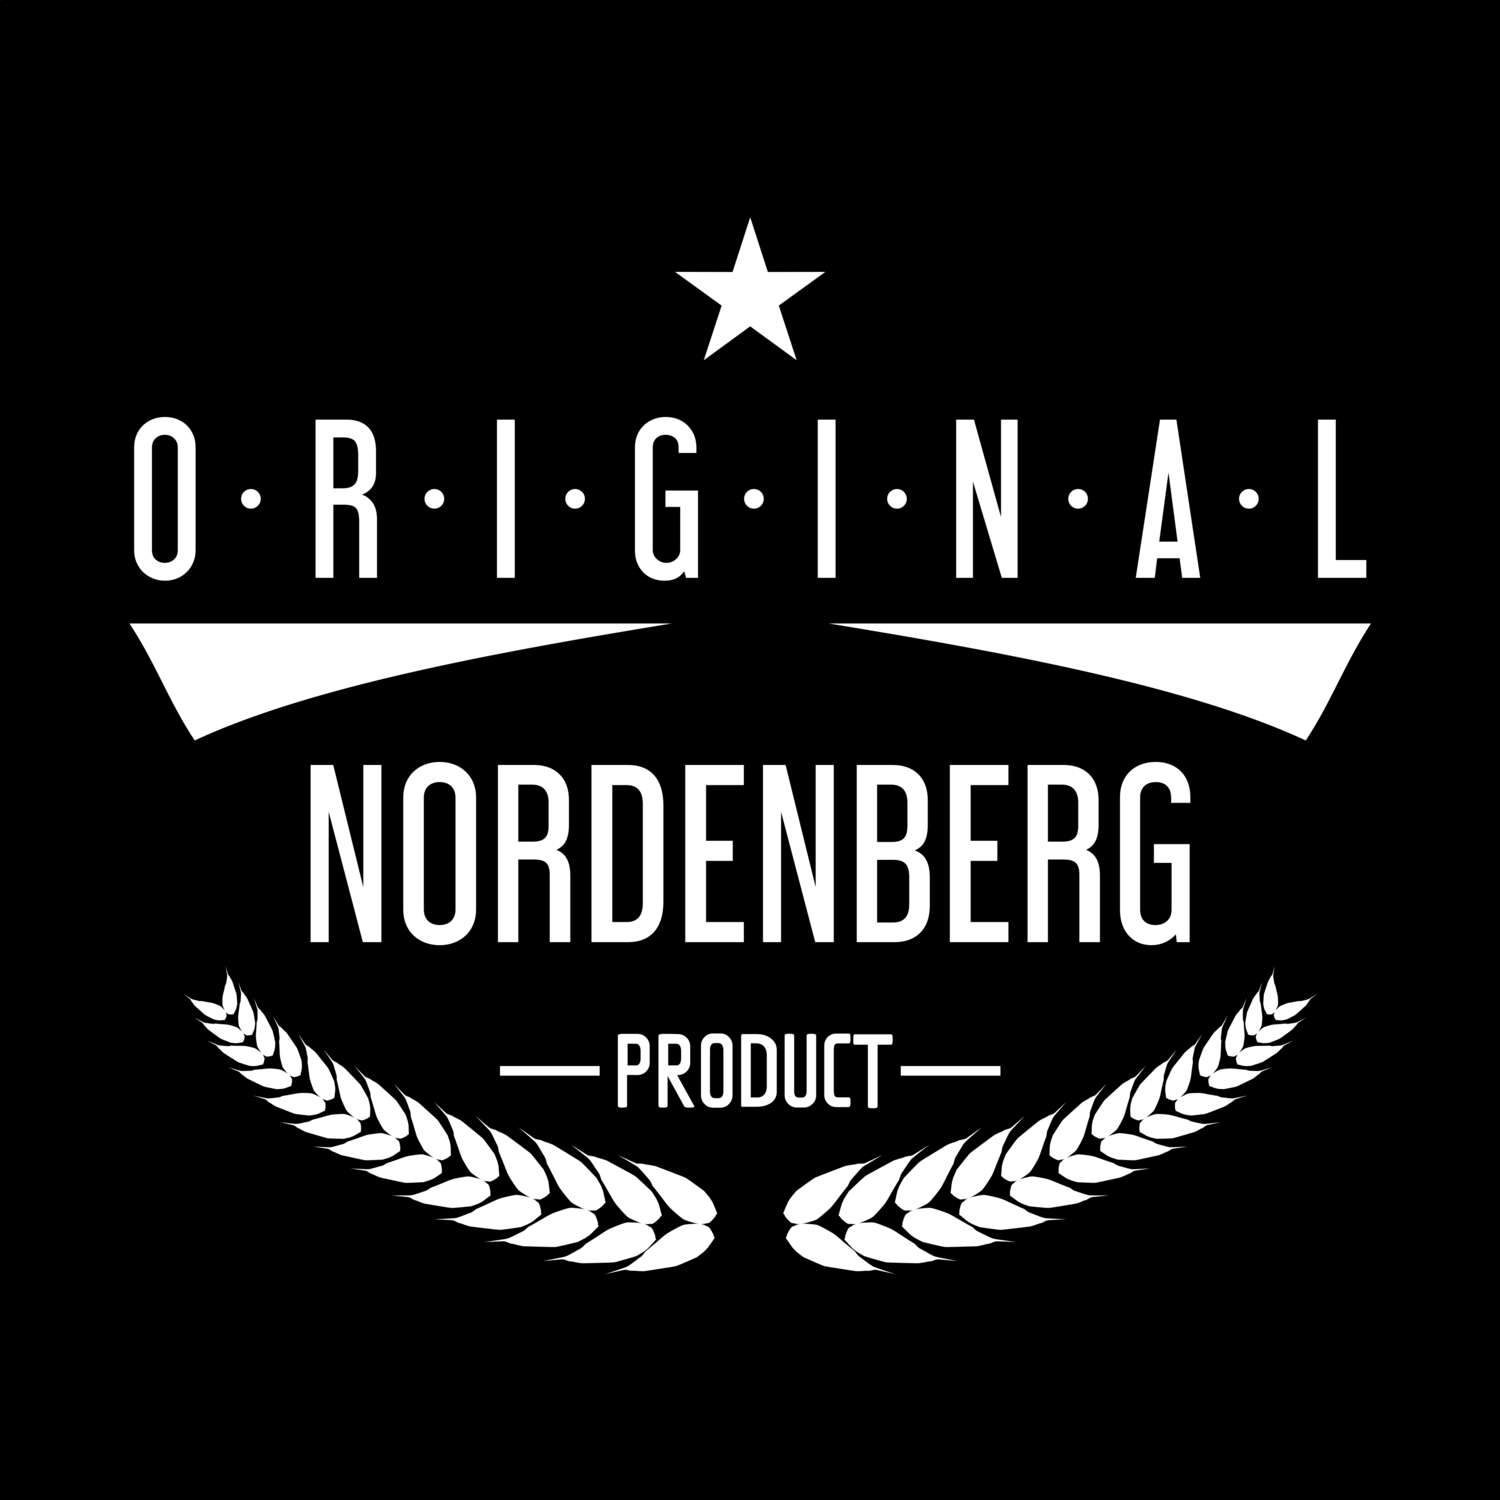 Nordenberg T-Shirt »Original Product«